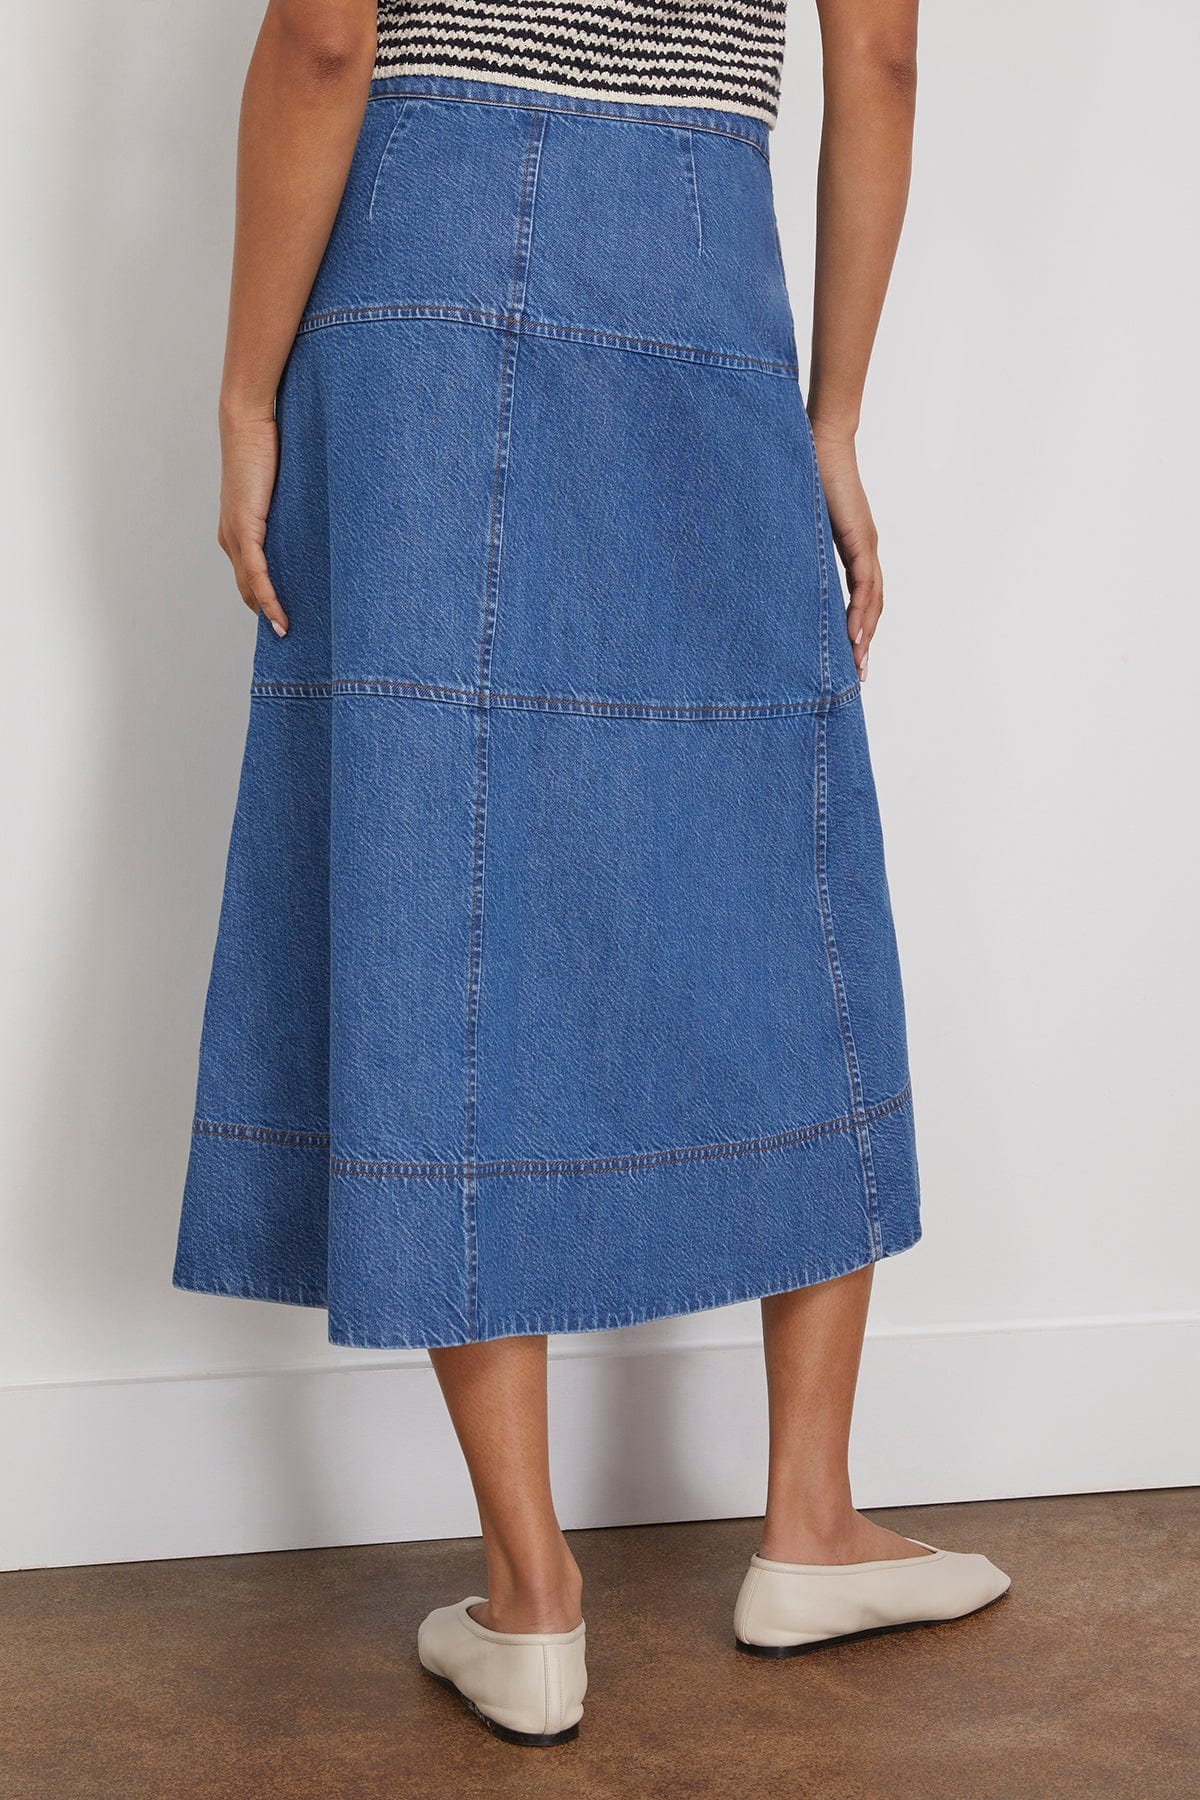 Tanya Taylor Skirts Hudie Skirt in Medium Indigo Blue